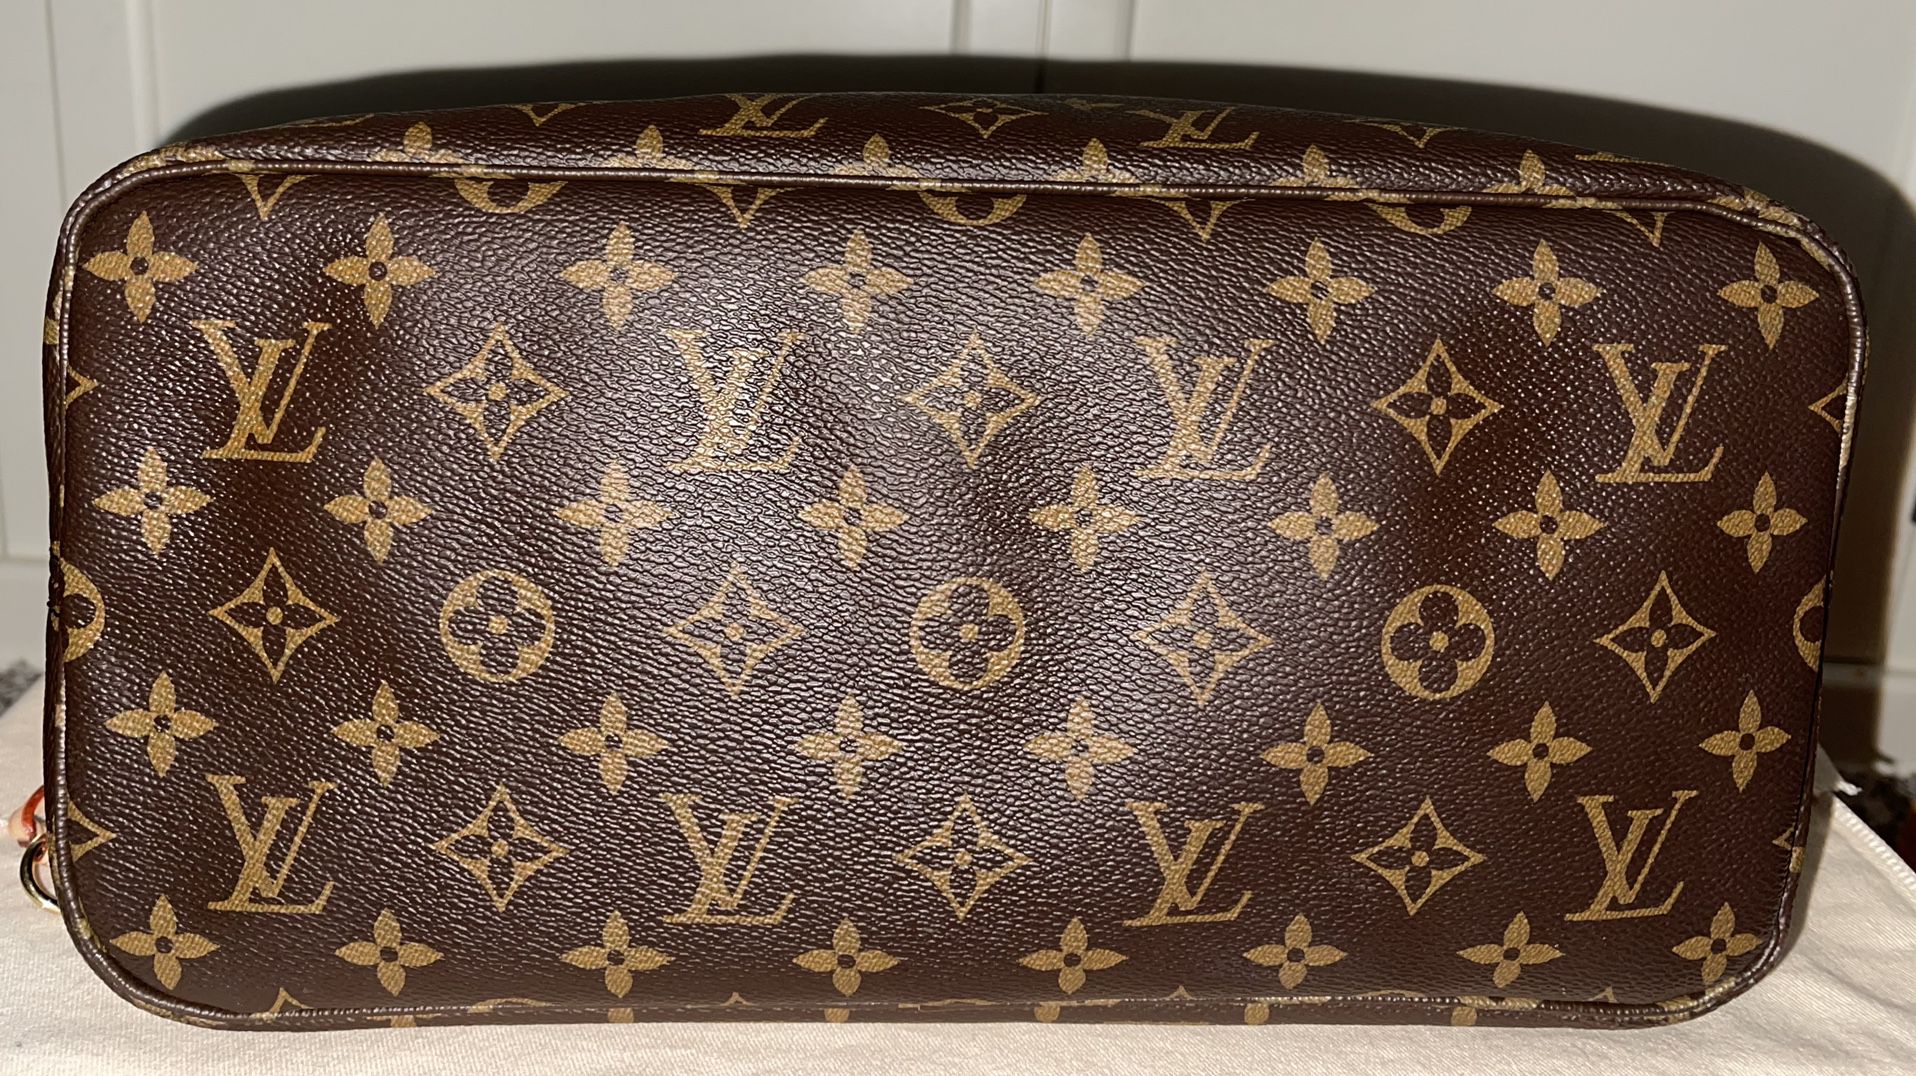 Louis Vuitton Neverfull Handbags for sale in Abilene, Texas